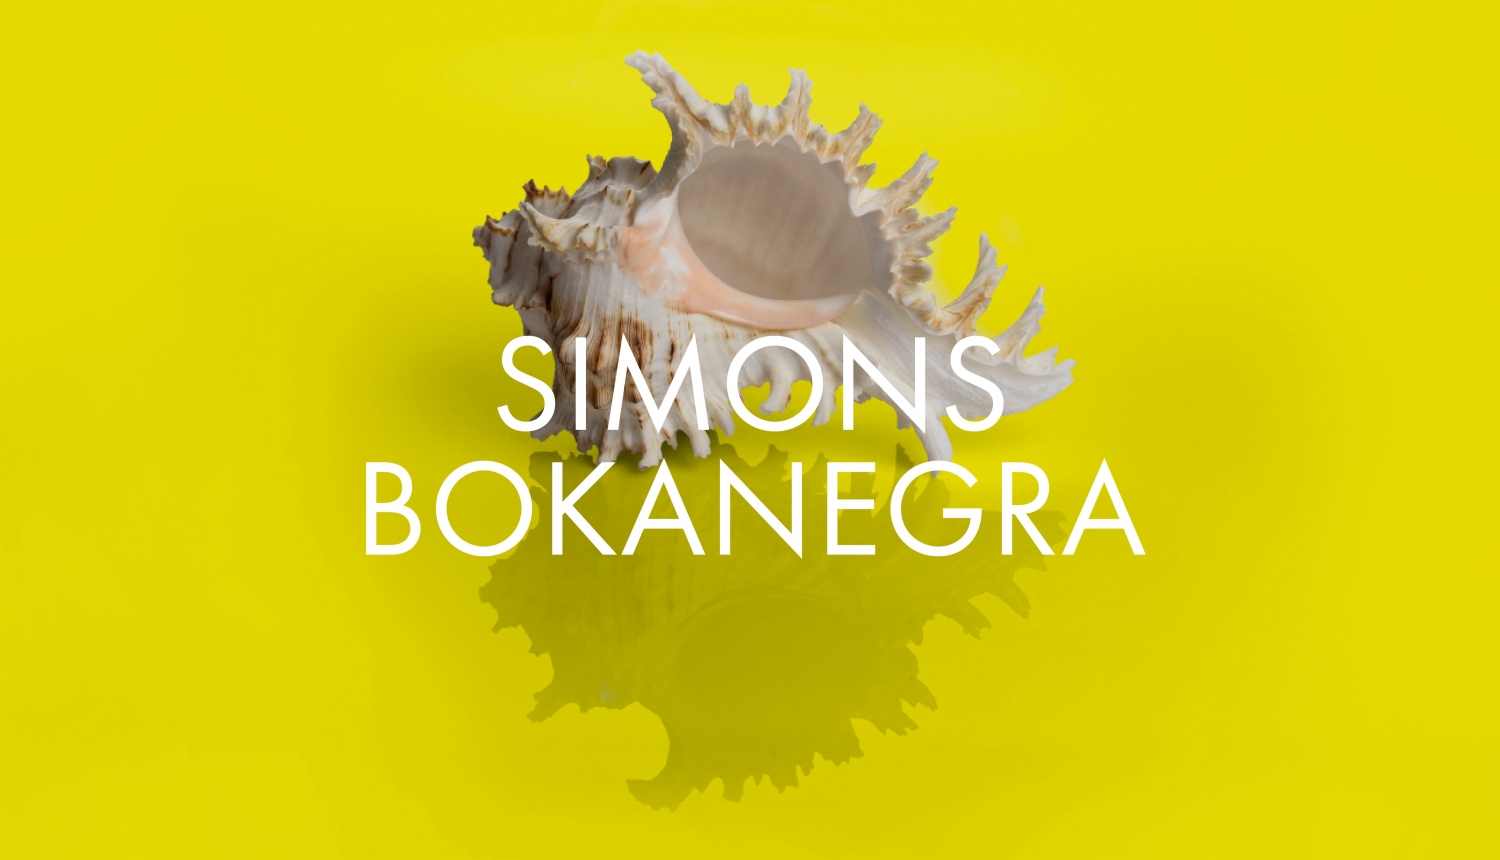 Operas “Simons Bokanegra” vizuālais materiāls.